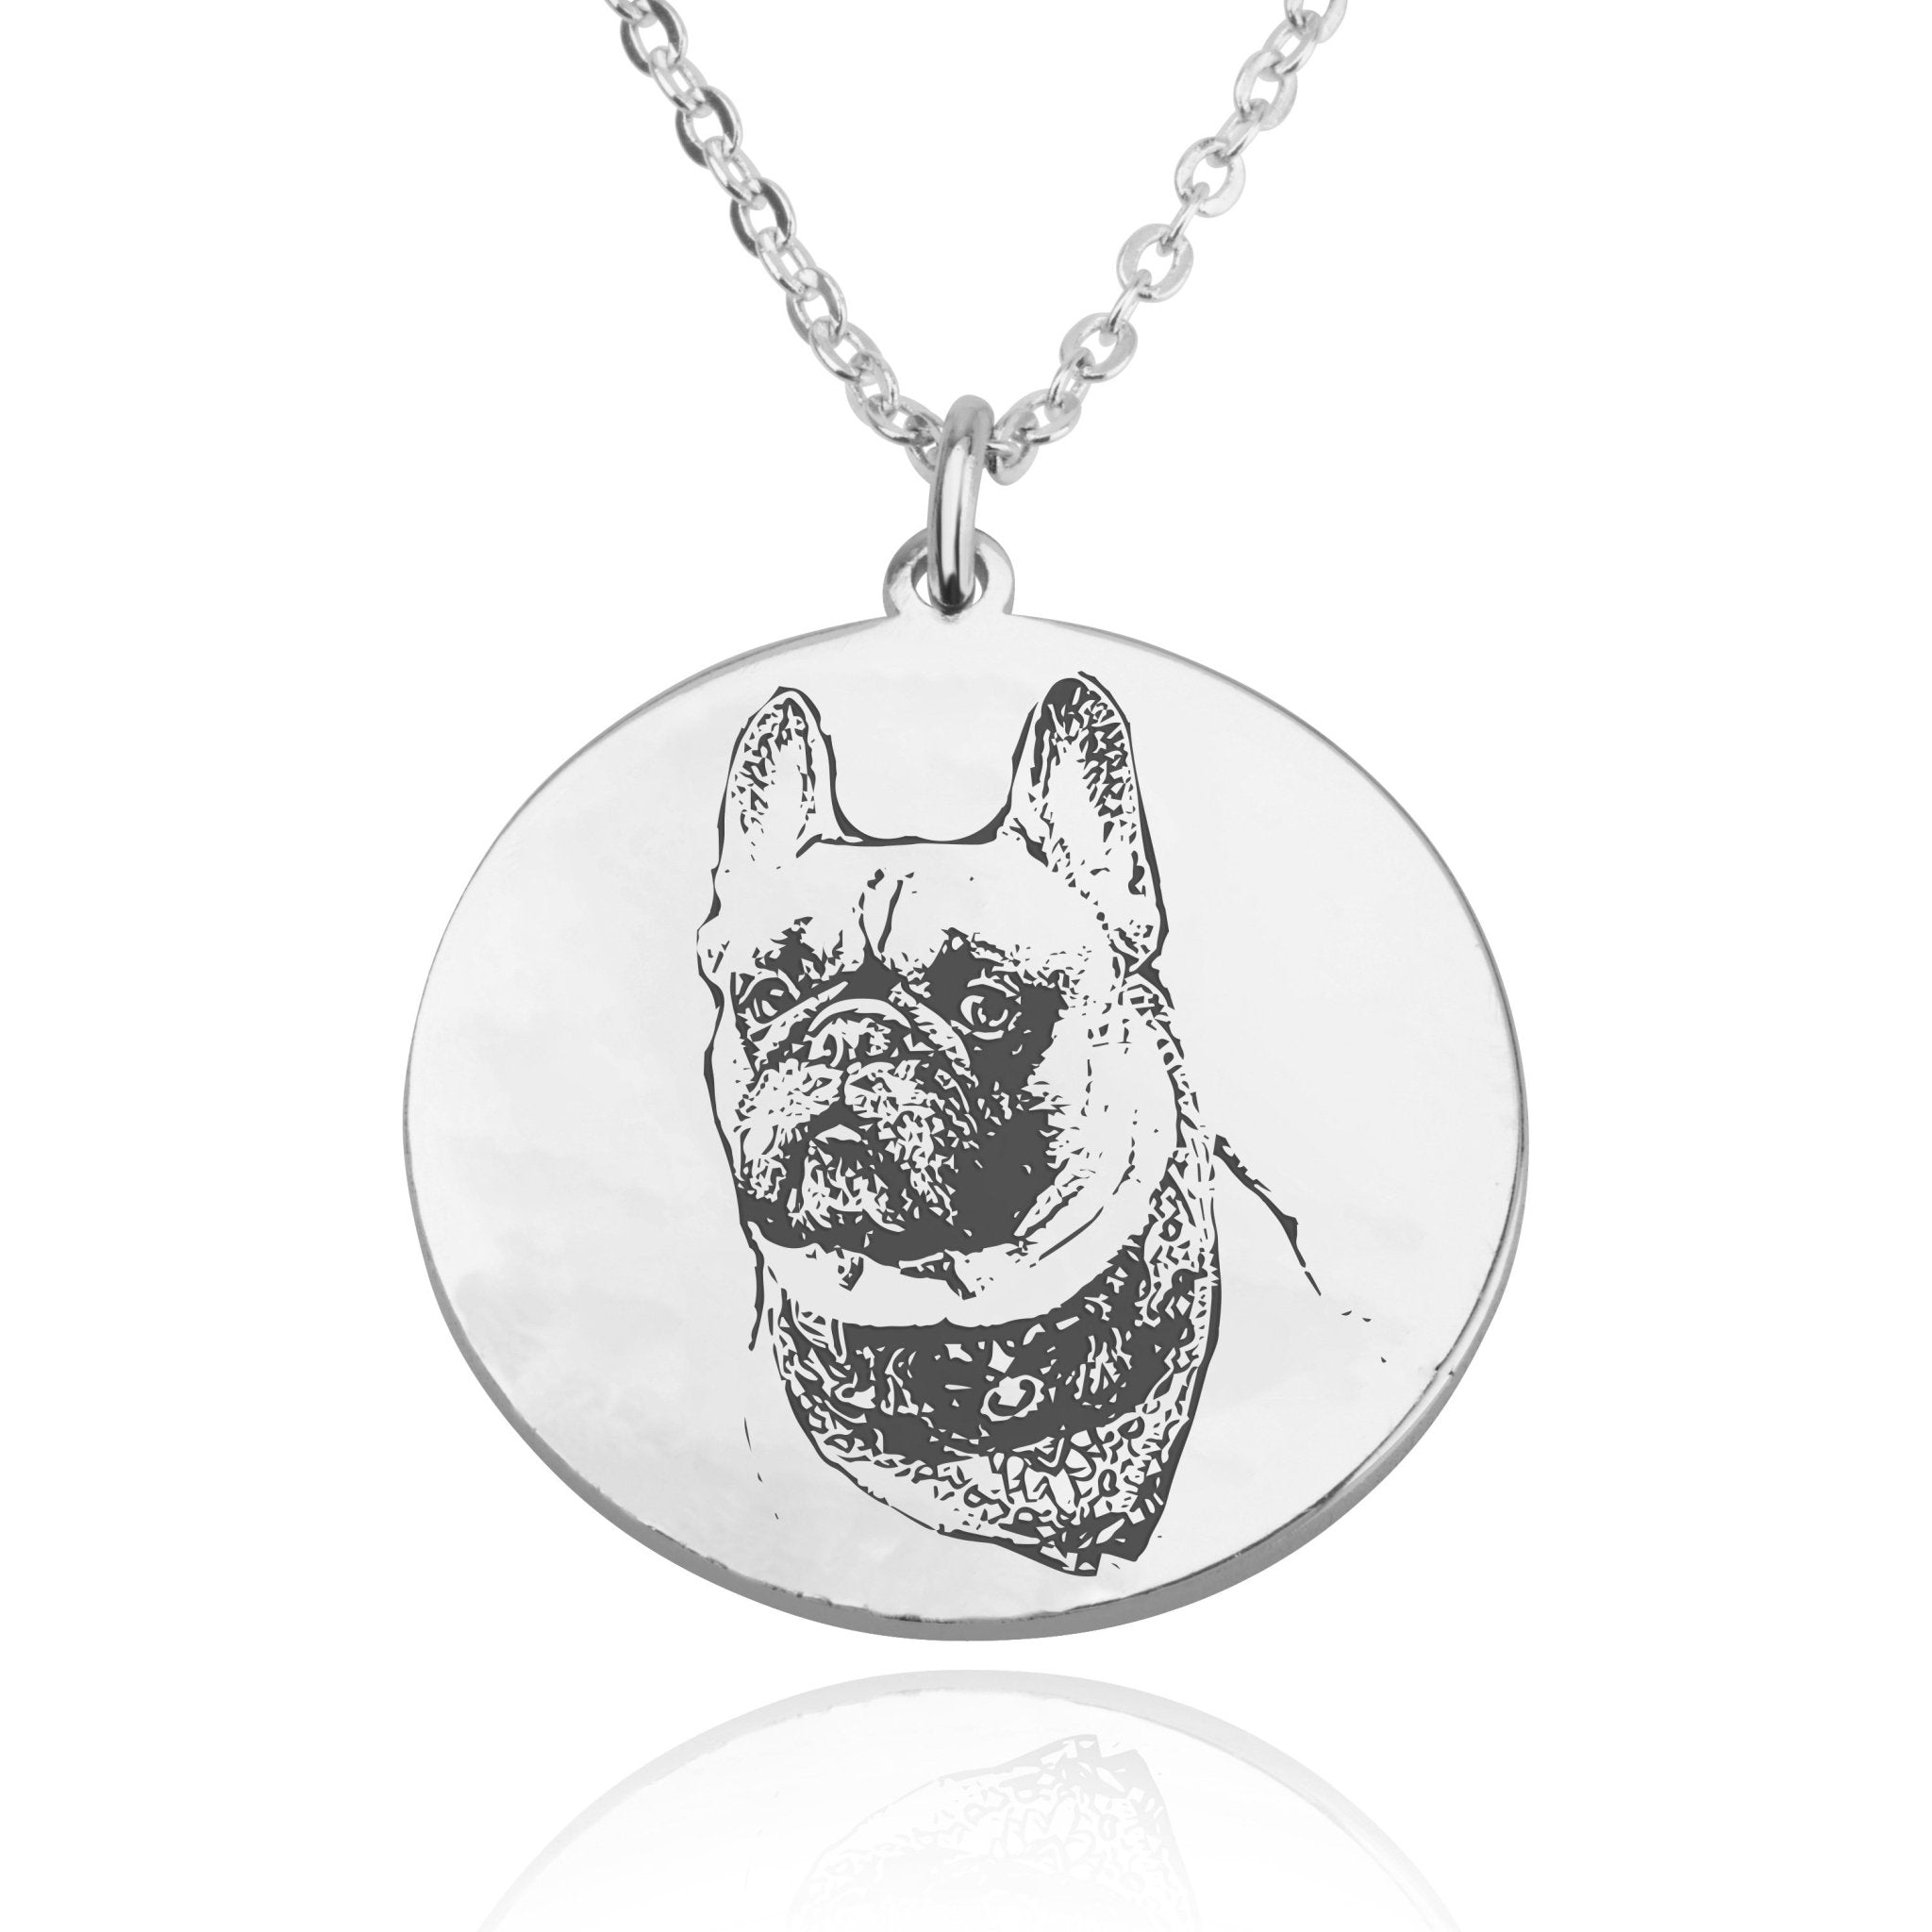 Personalized Dog Photo Engraved Necklace